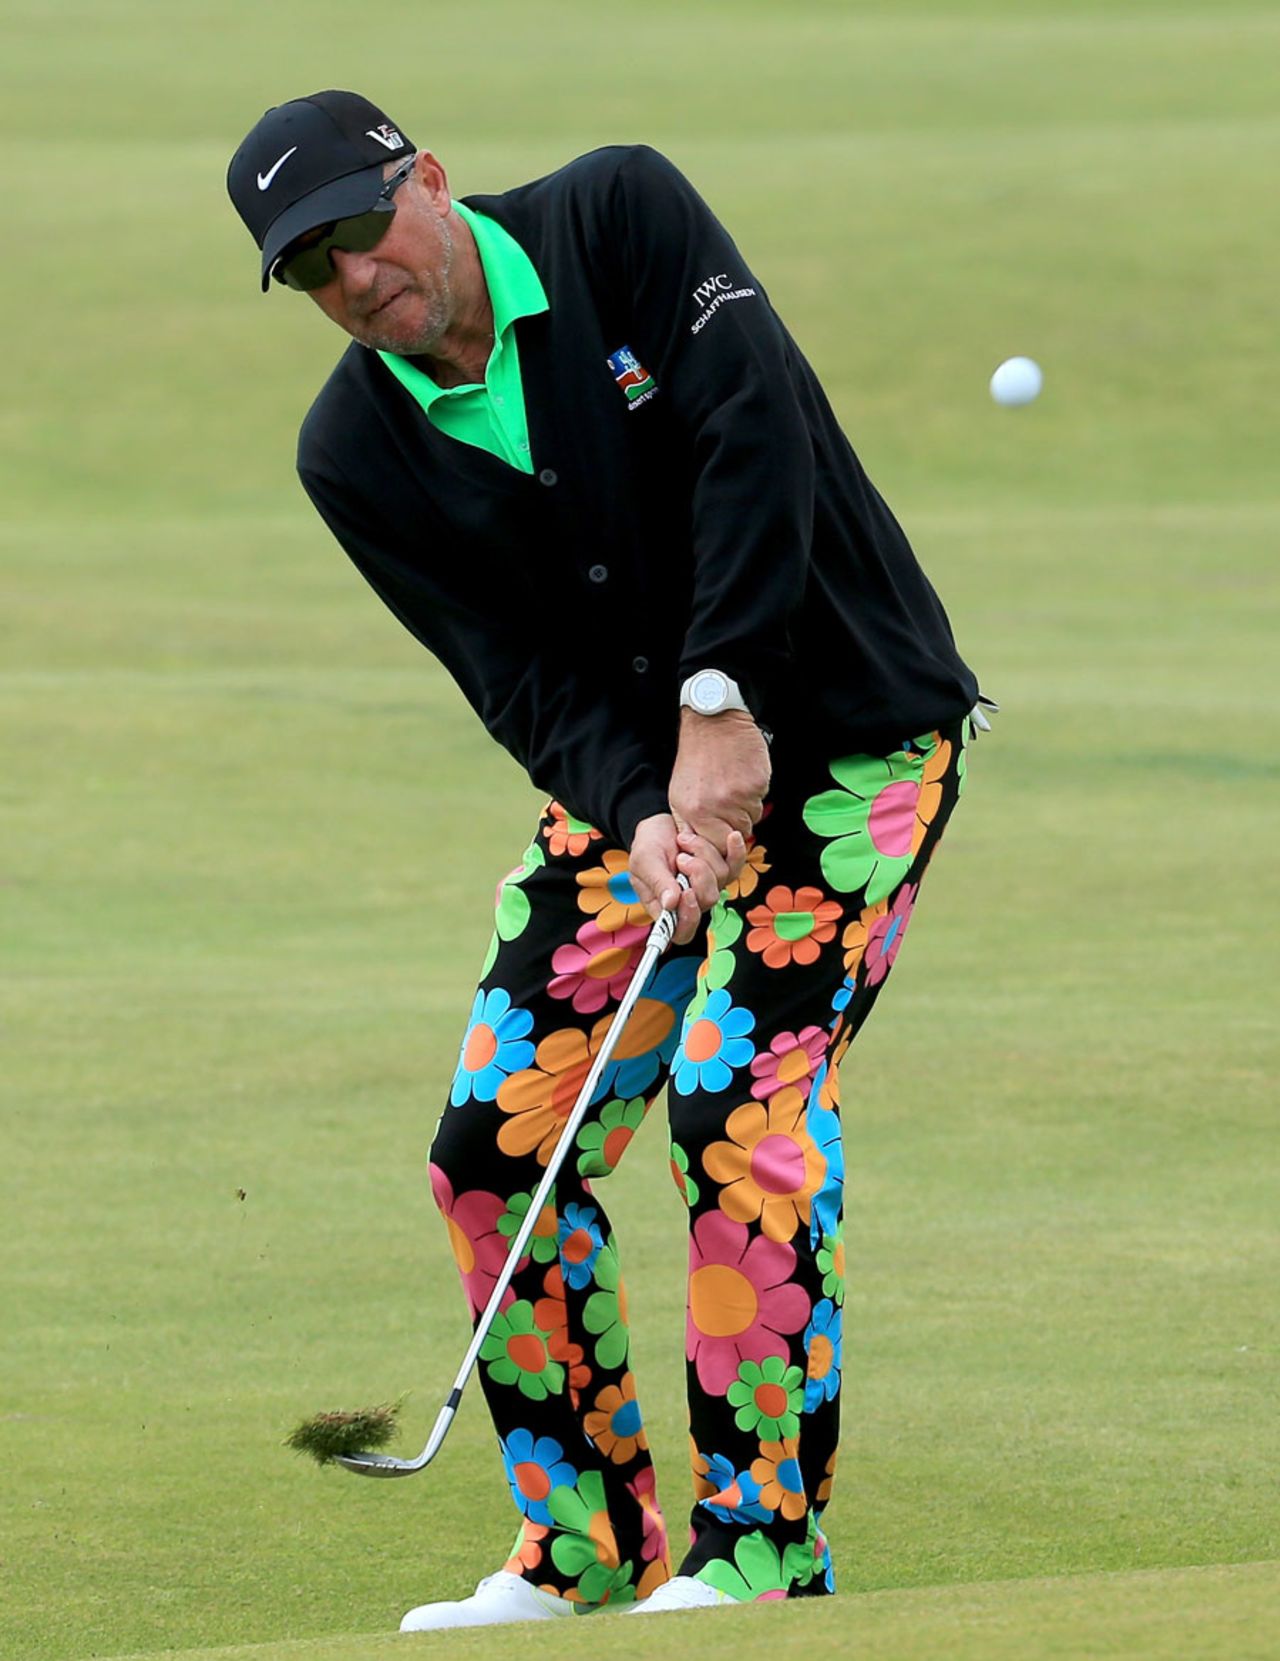 Sir Ian Botham unveils some fancy golfing apparel, St Andrews, September 23, 2013